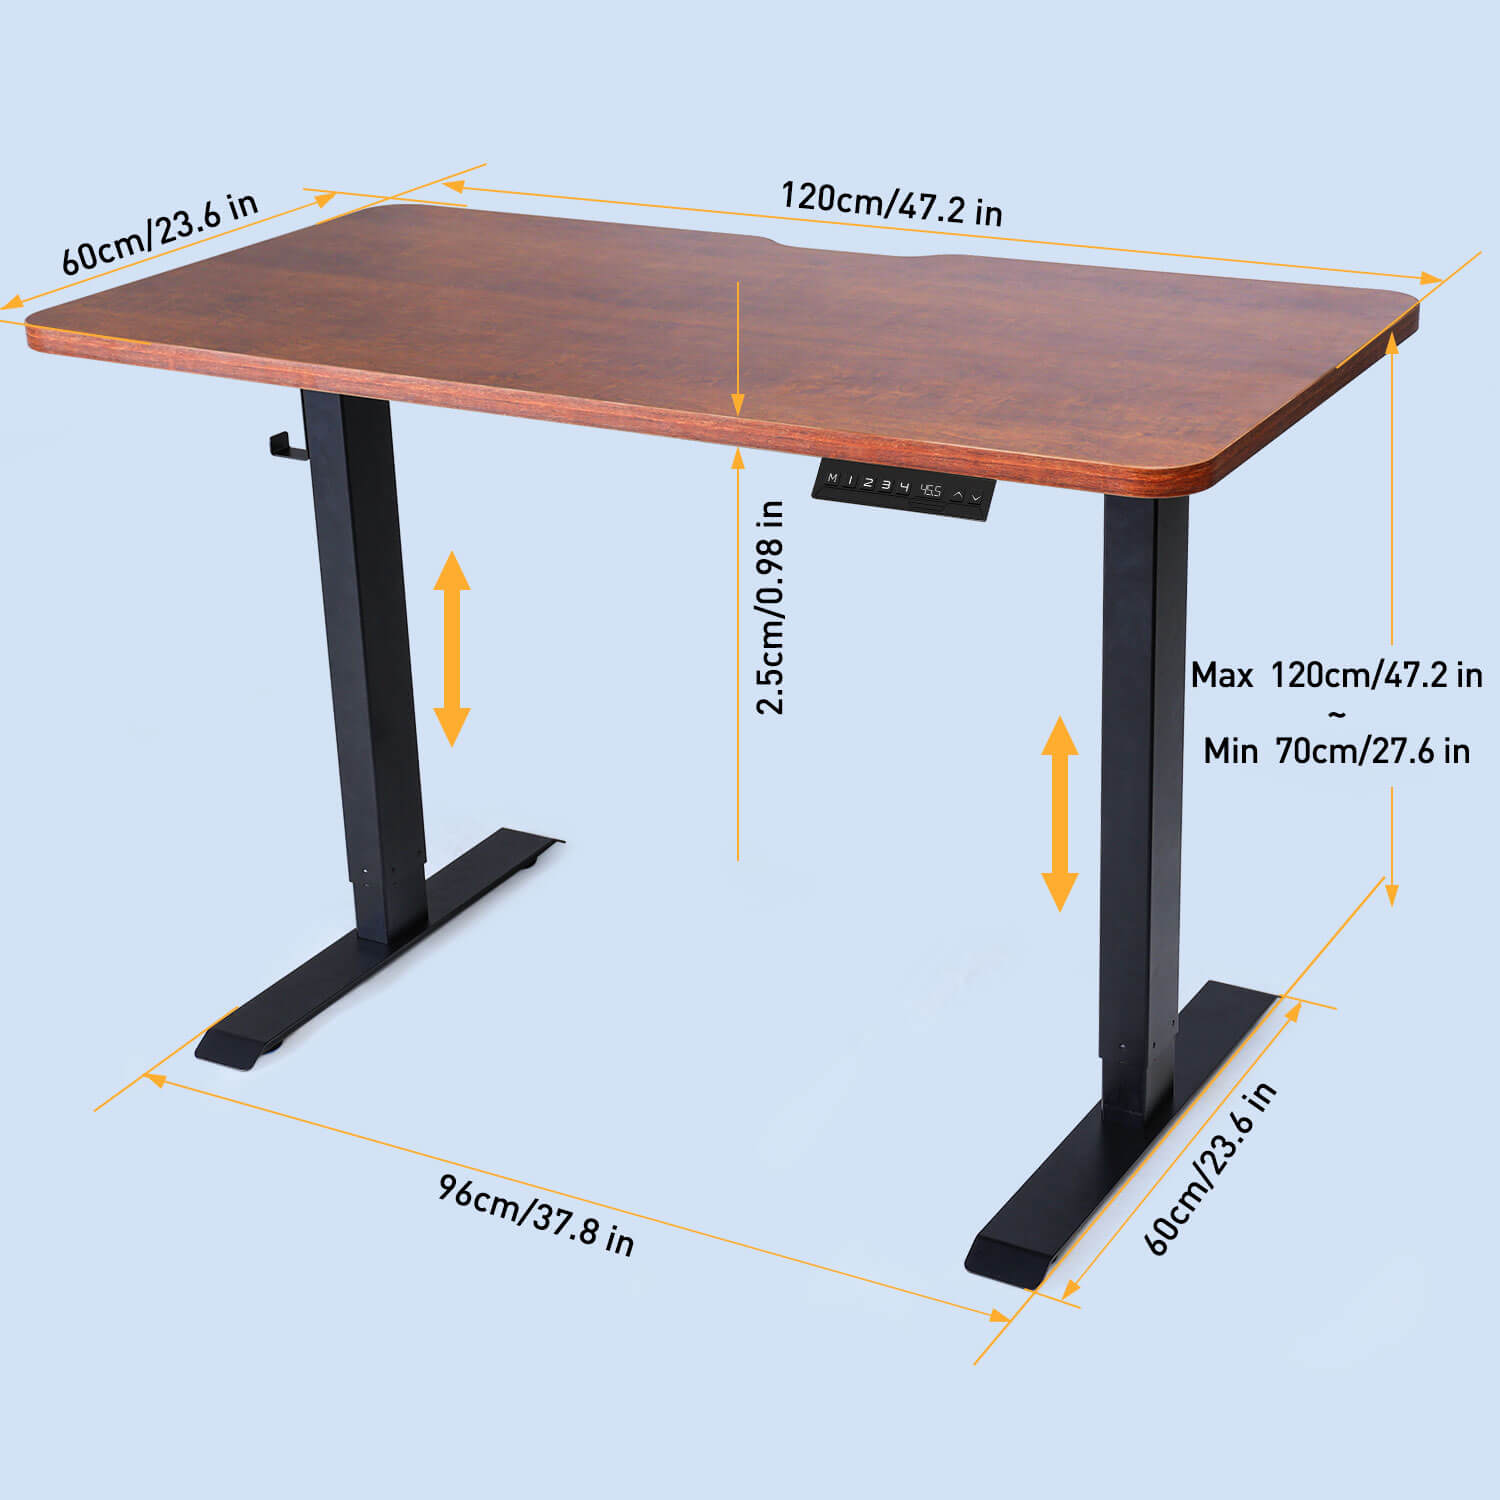 Mahogany standing desk for create an ergonomics workstation